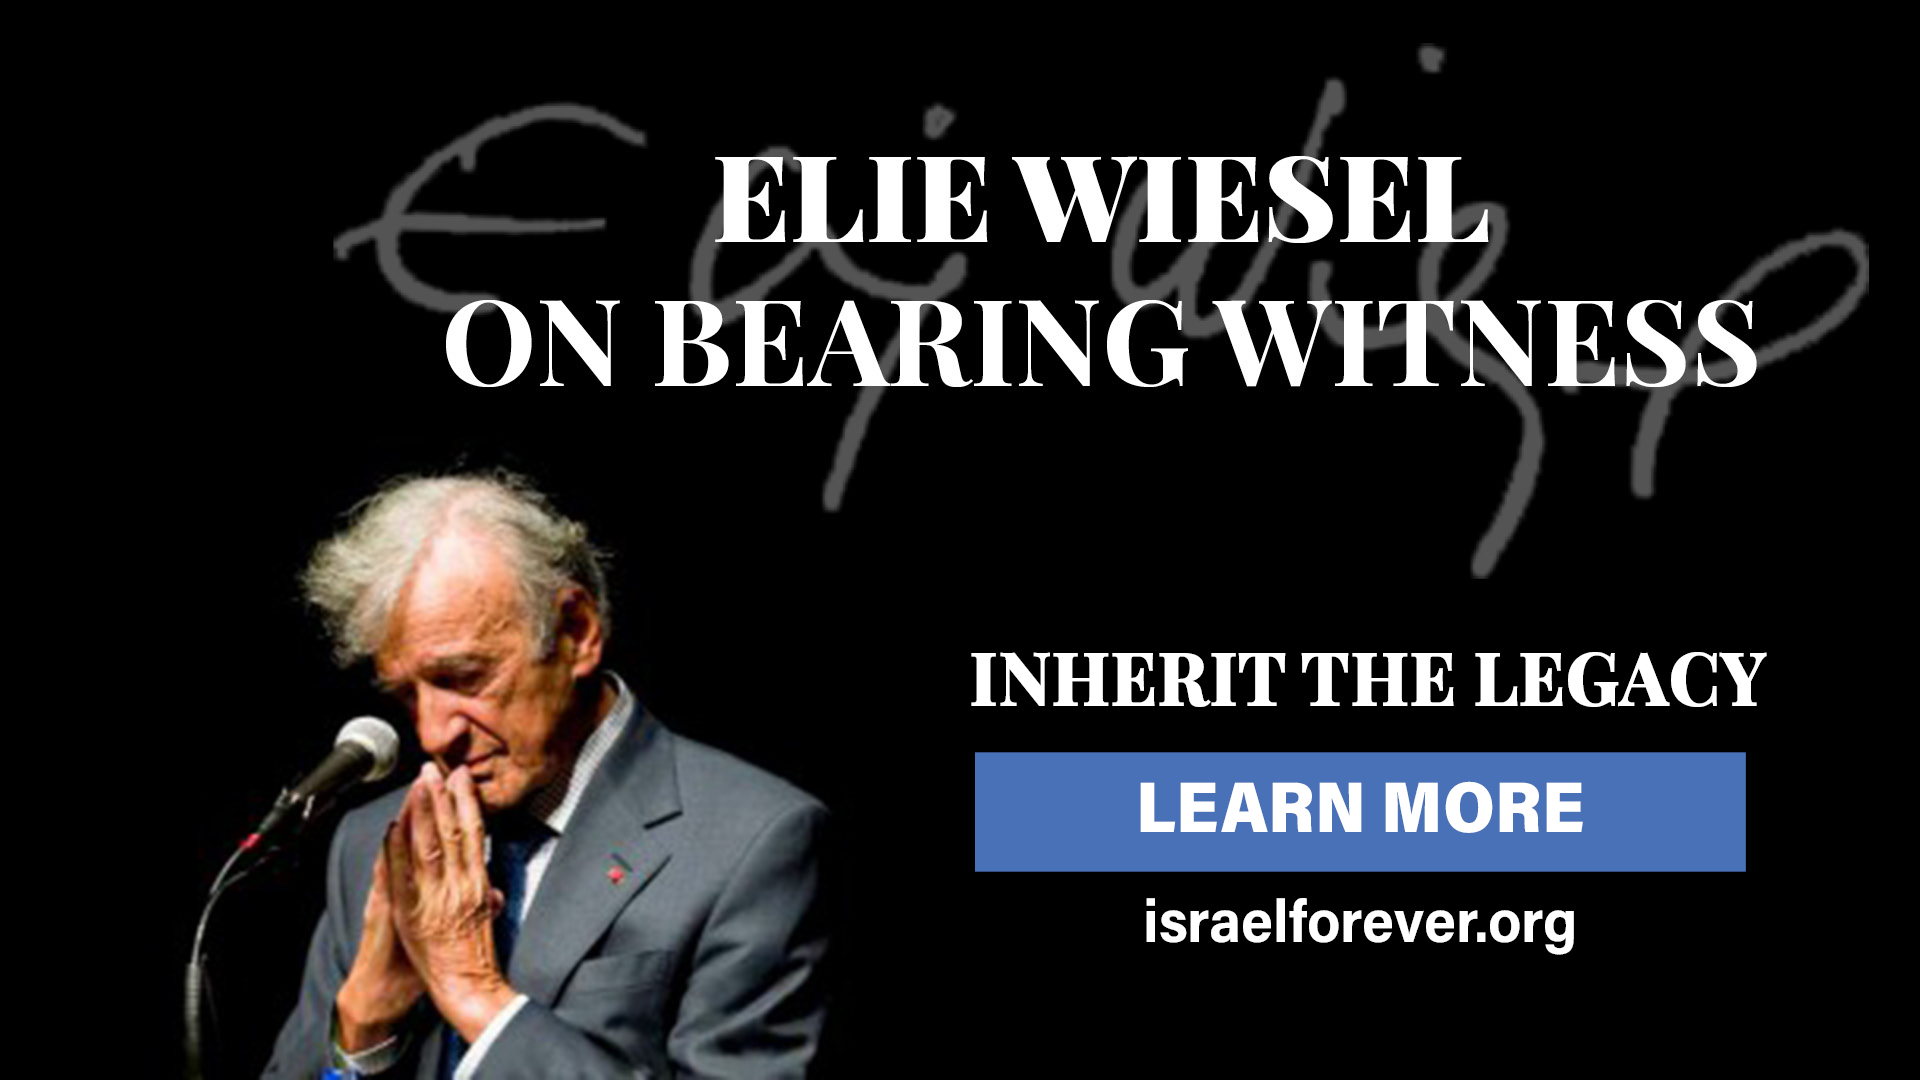 Elie Wiesel on Bearing Witness